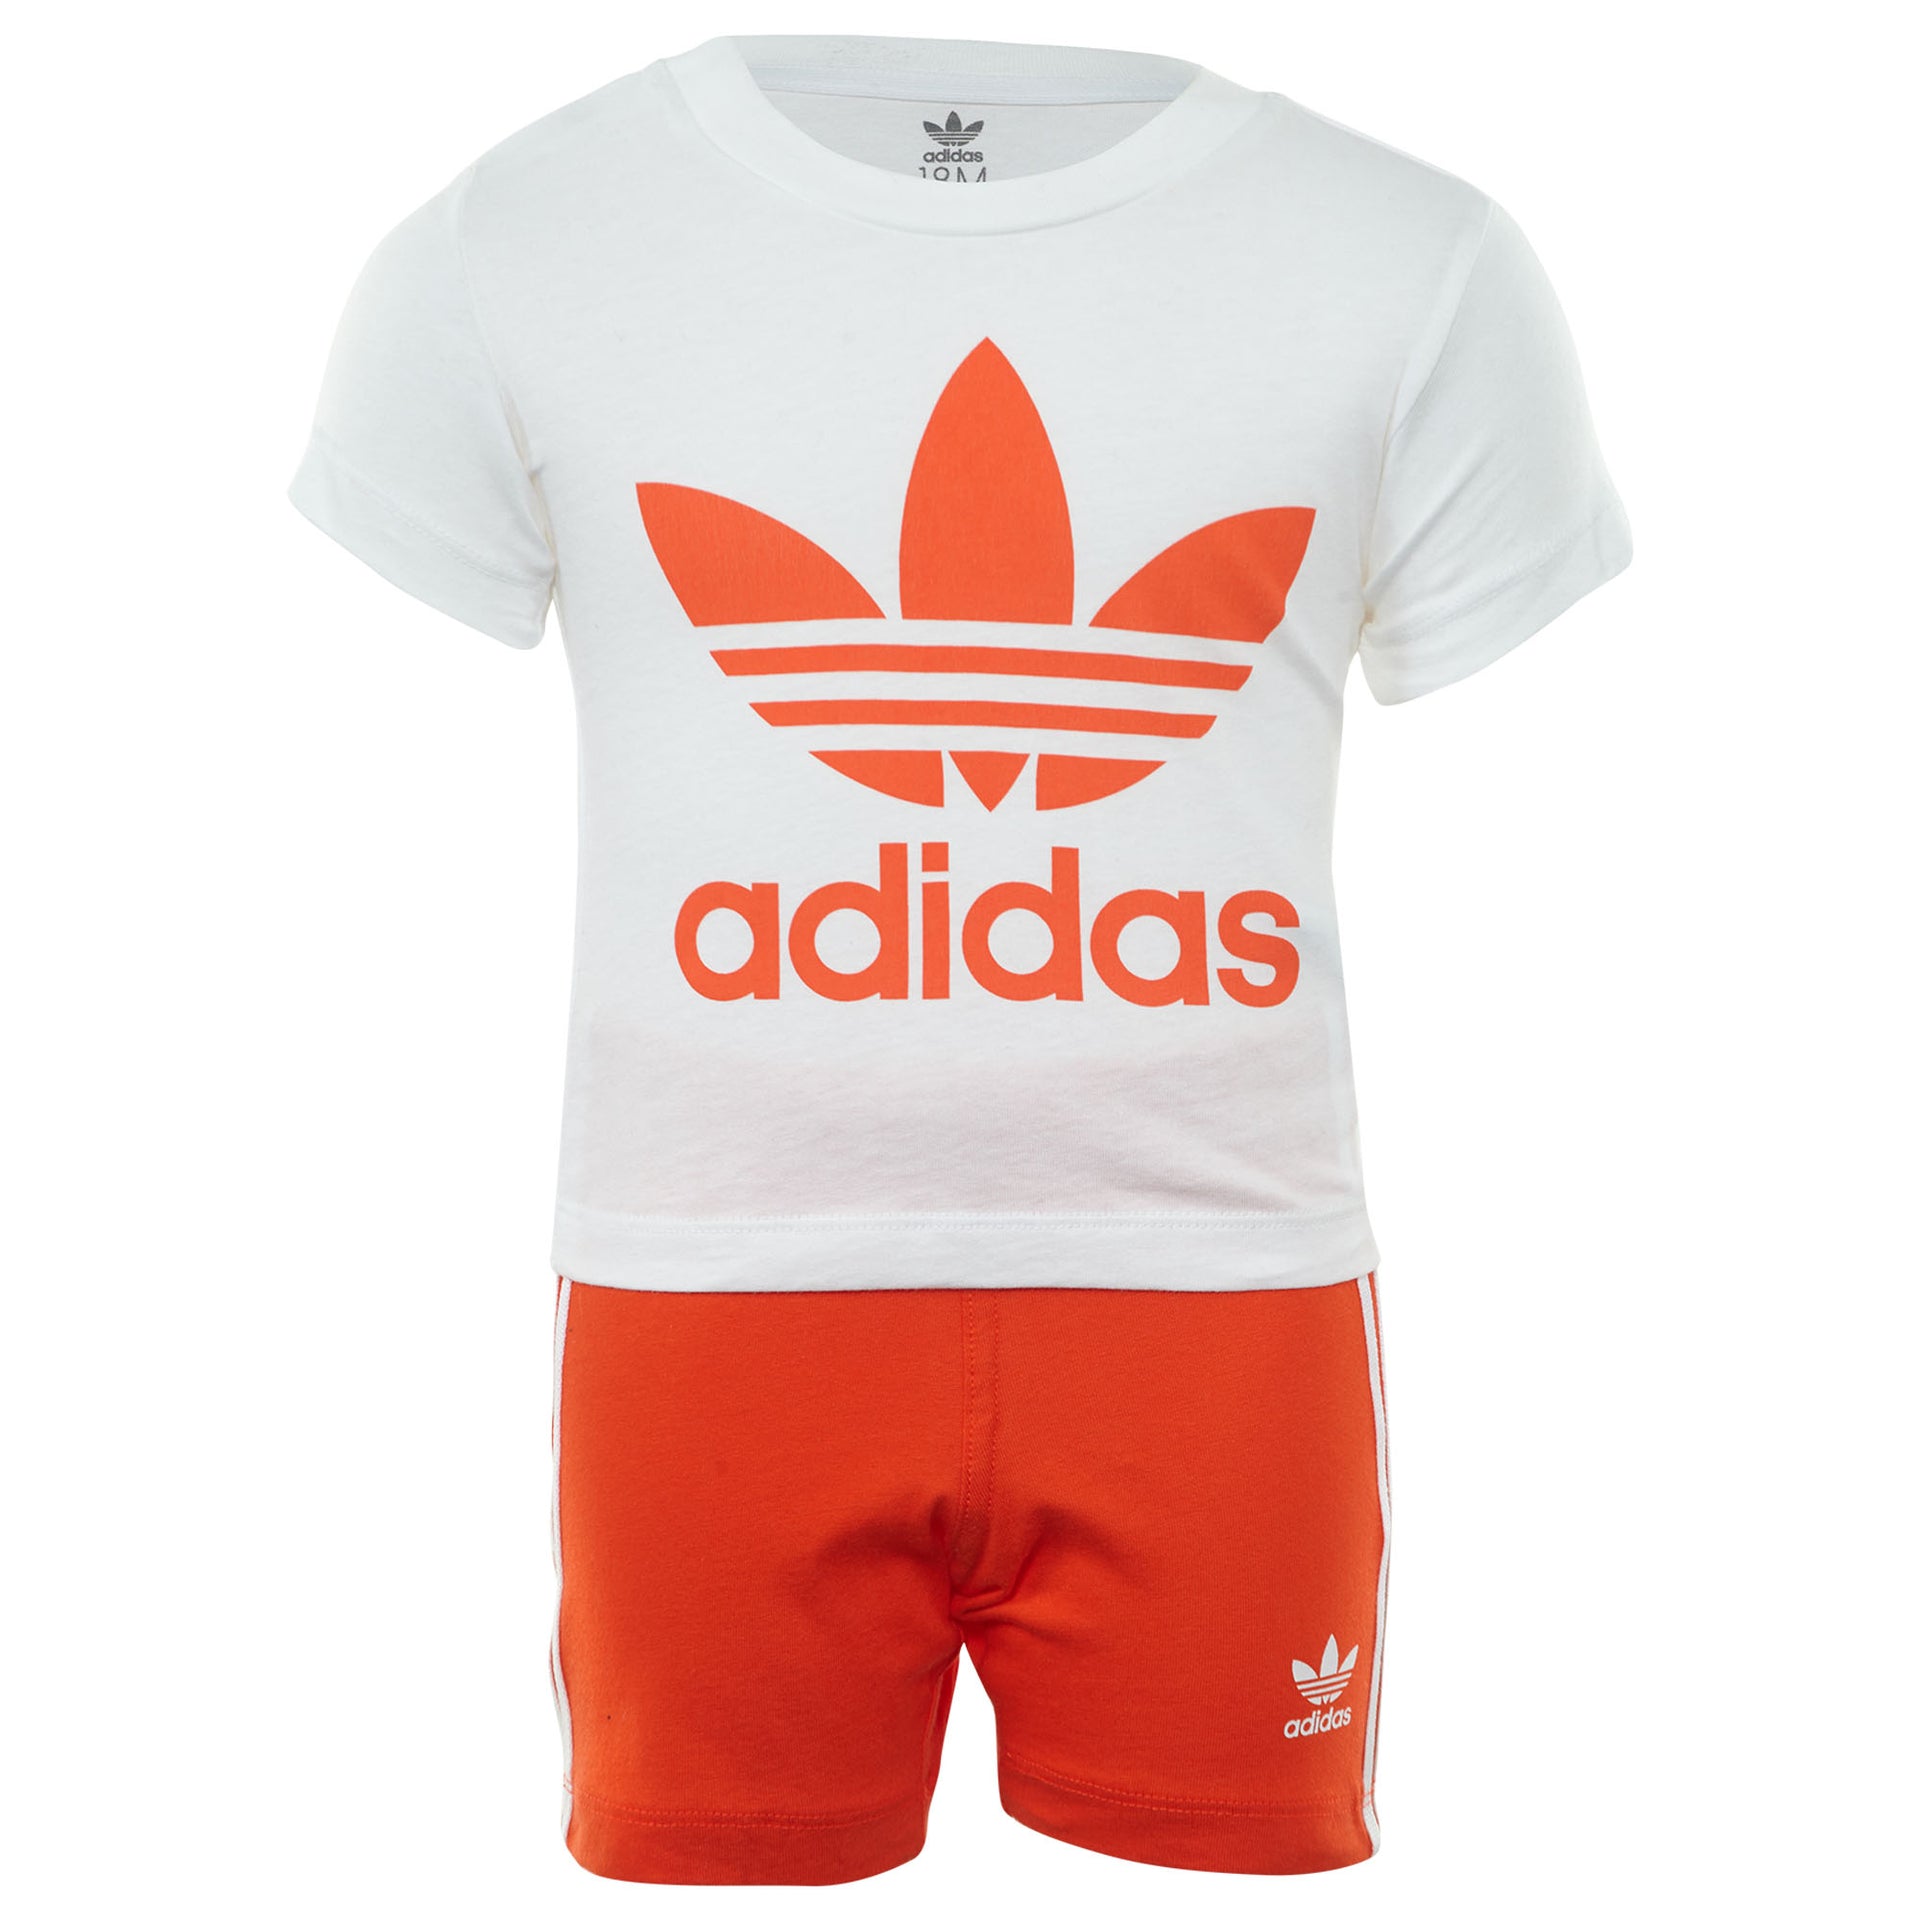 Adidas Short Tee Set Toddlers Style : Dv2814-WHITE/ACTORA